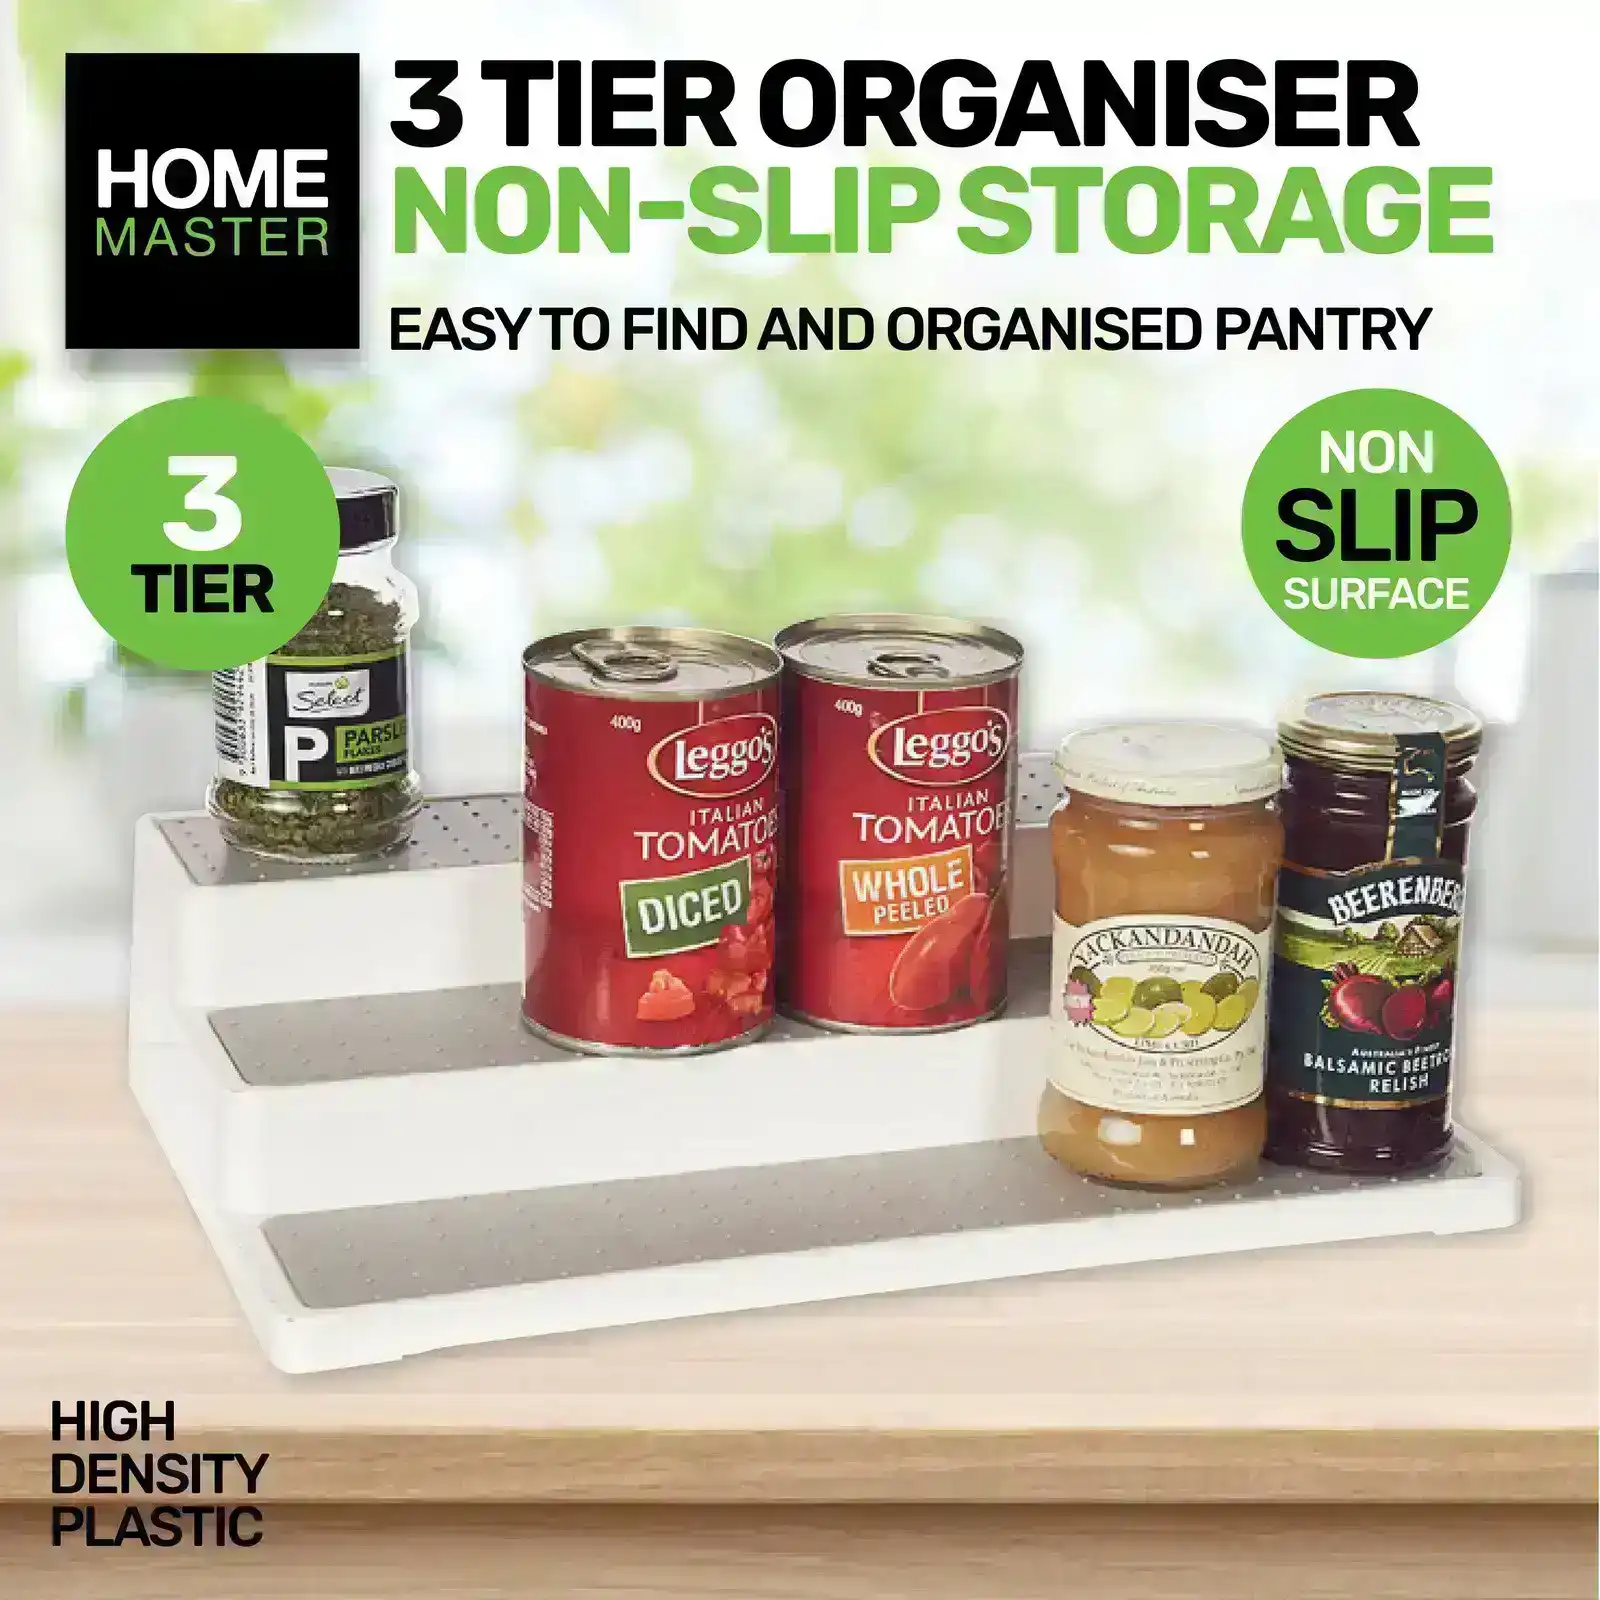 Home Master® Organiser 3 Tier Non-Slip Storage Kitchen Pantry Tabletops 36cm